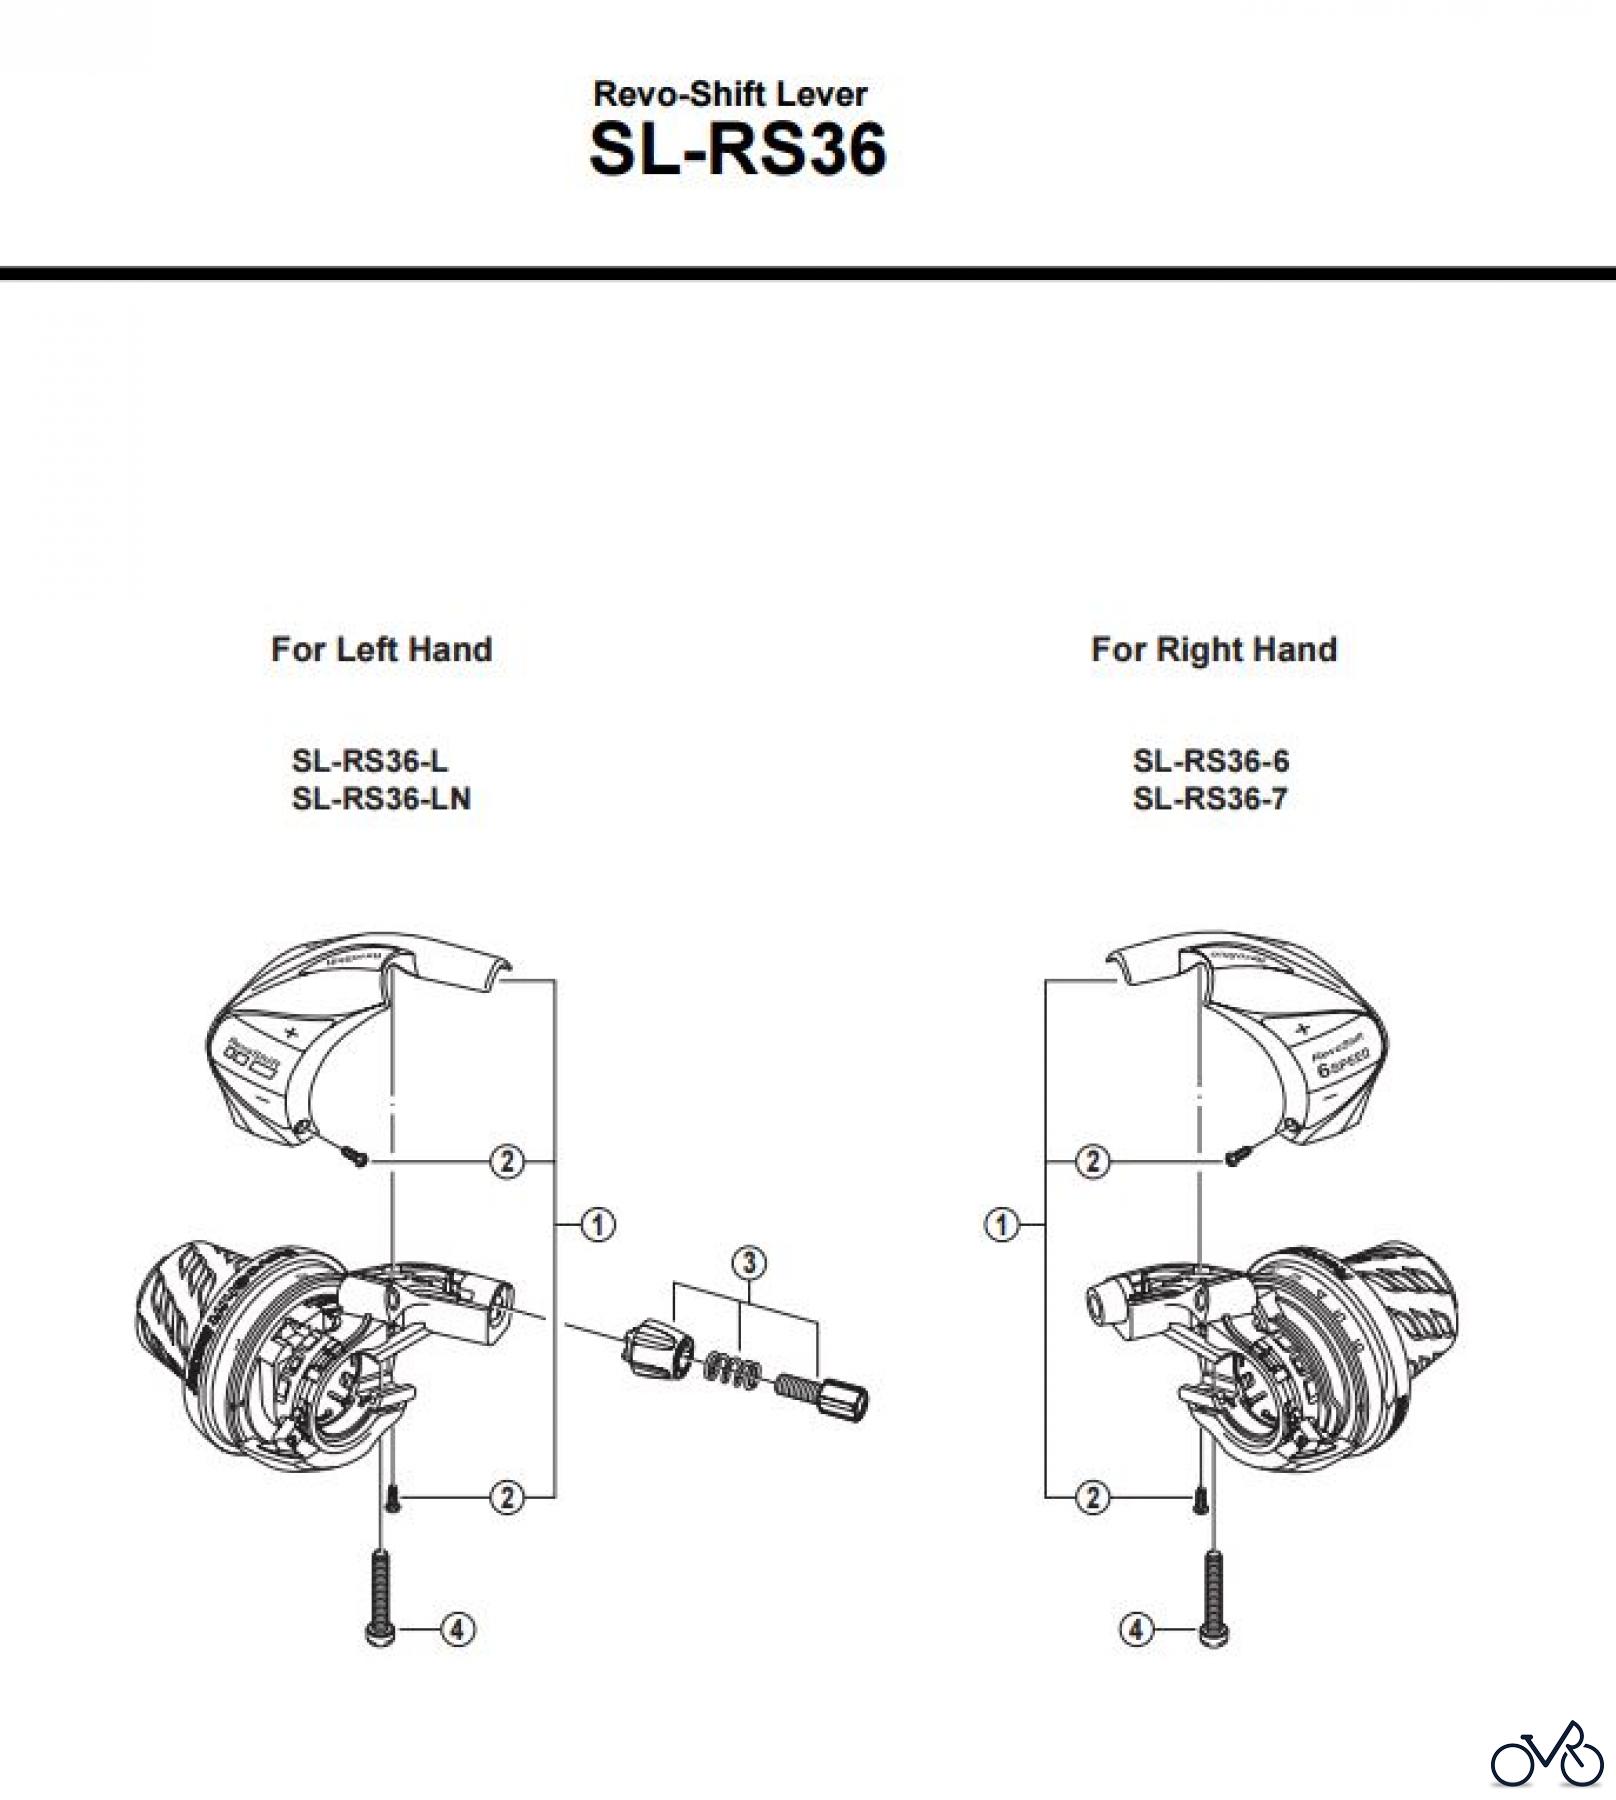  Shimano SL Shift Lever - Schalthebel SL-RS36 -3294  Revo-Shift Lever